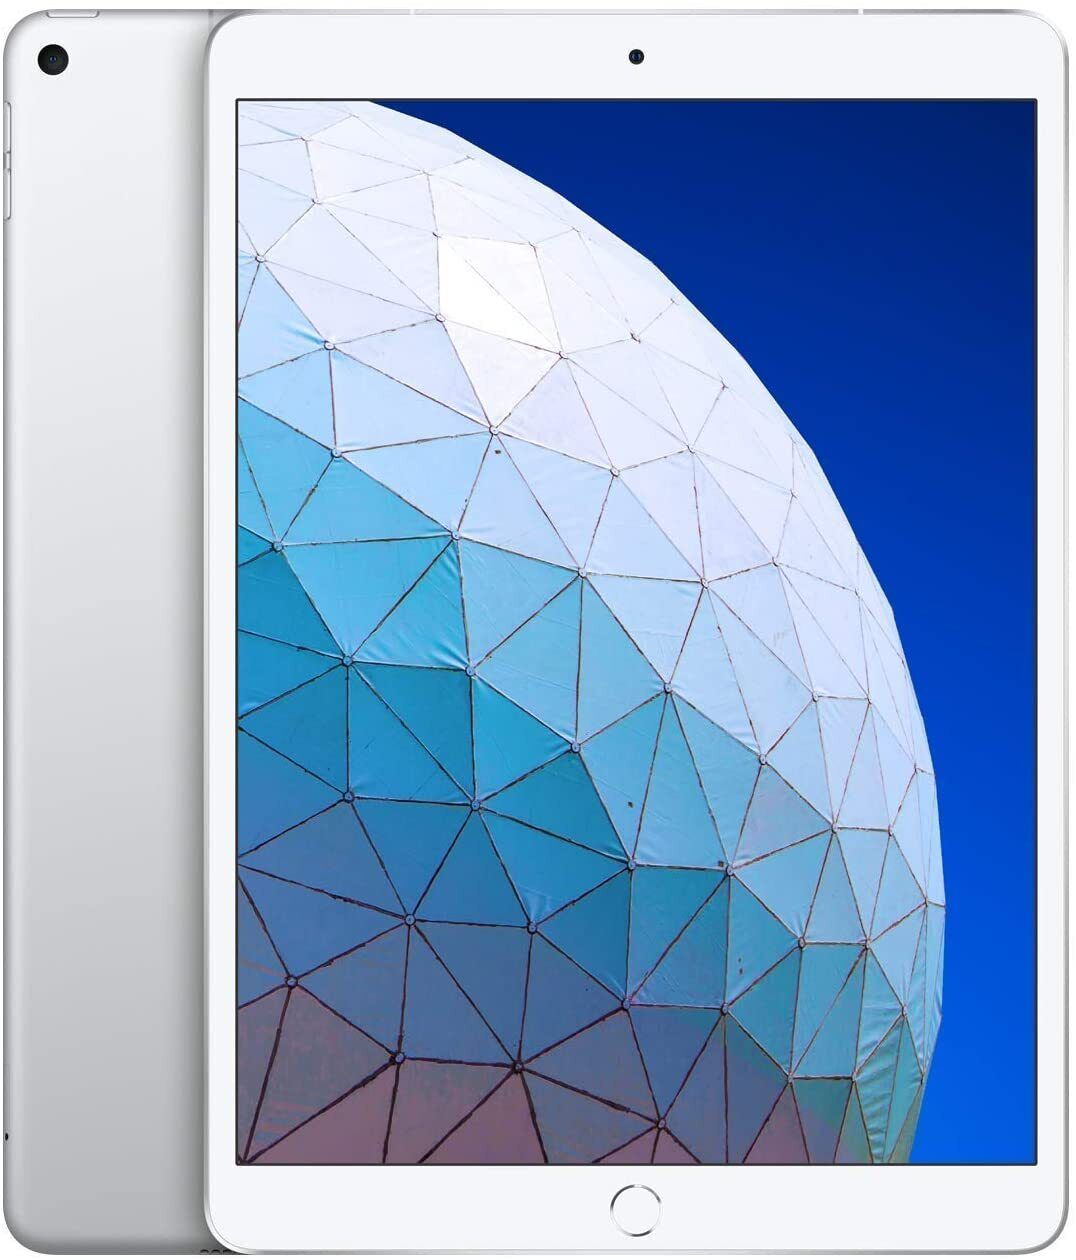 Apple iPad Air 3rd Generation, 64GB, WIFI + 4G Unlocked All Carriers - Silver